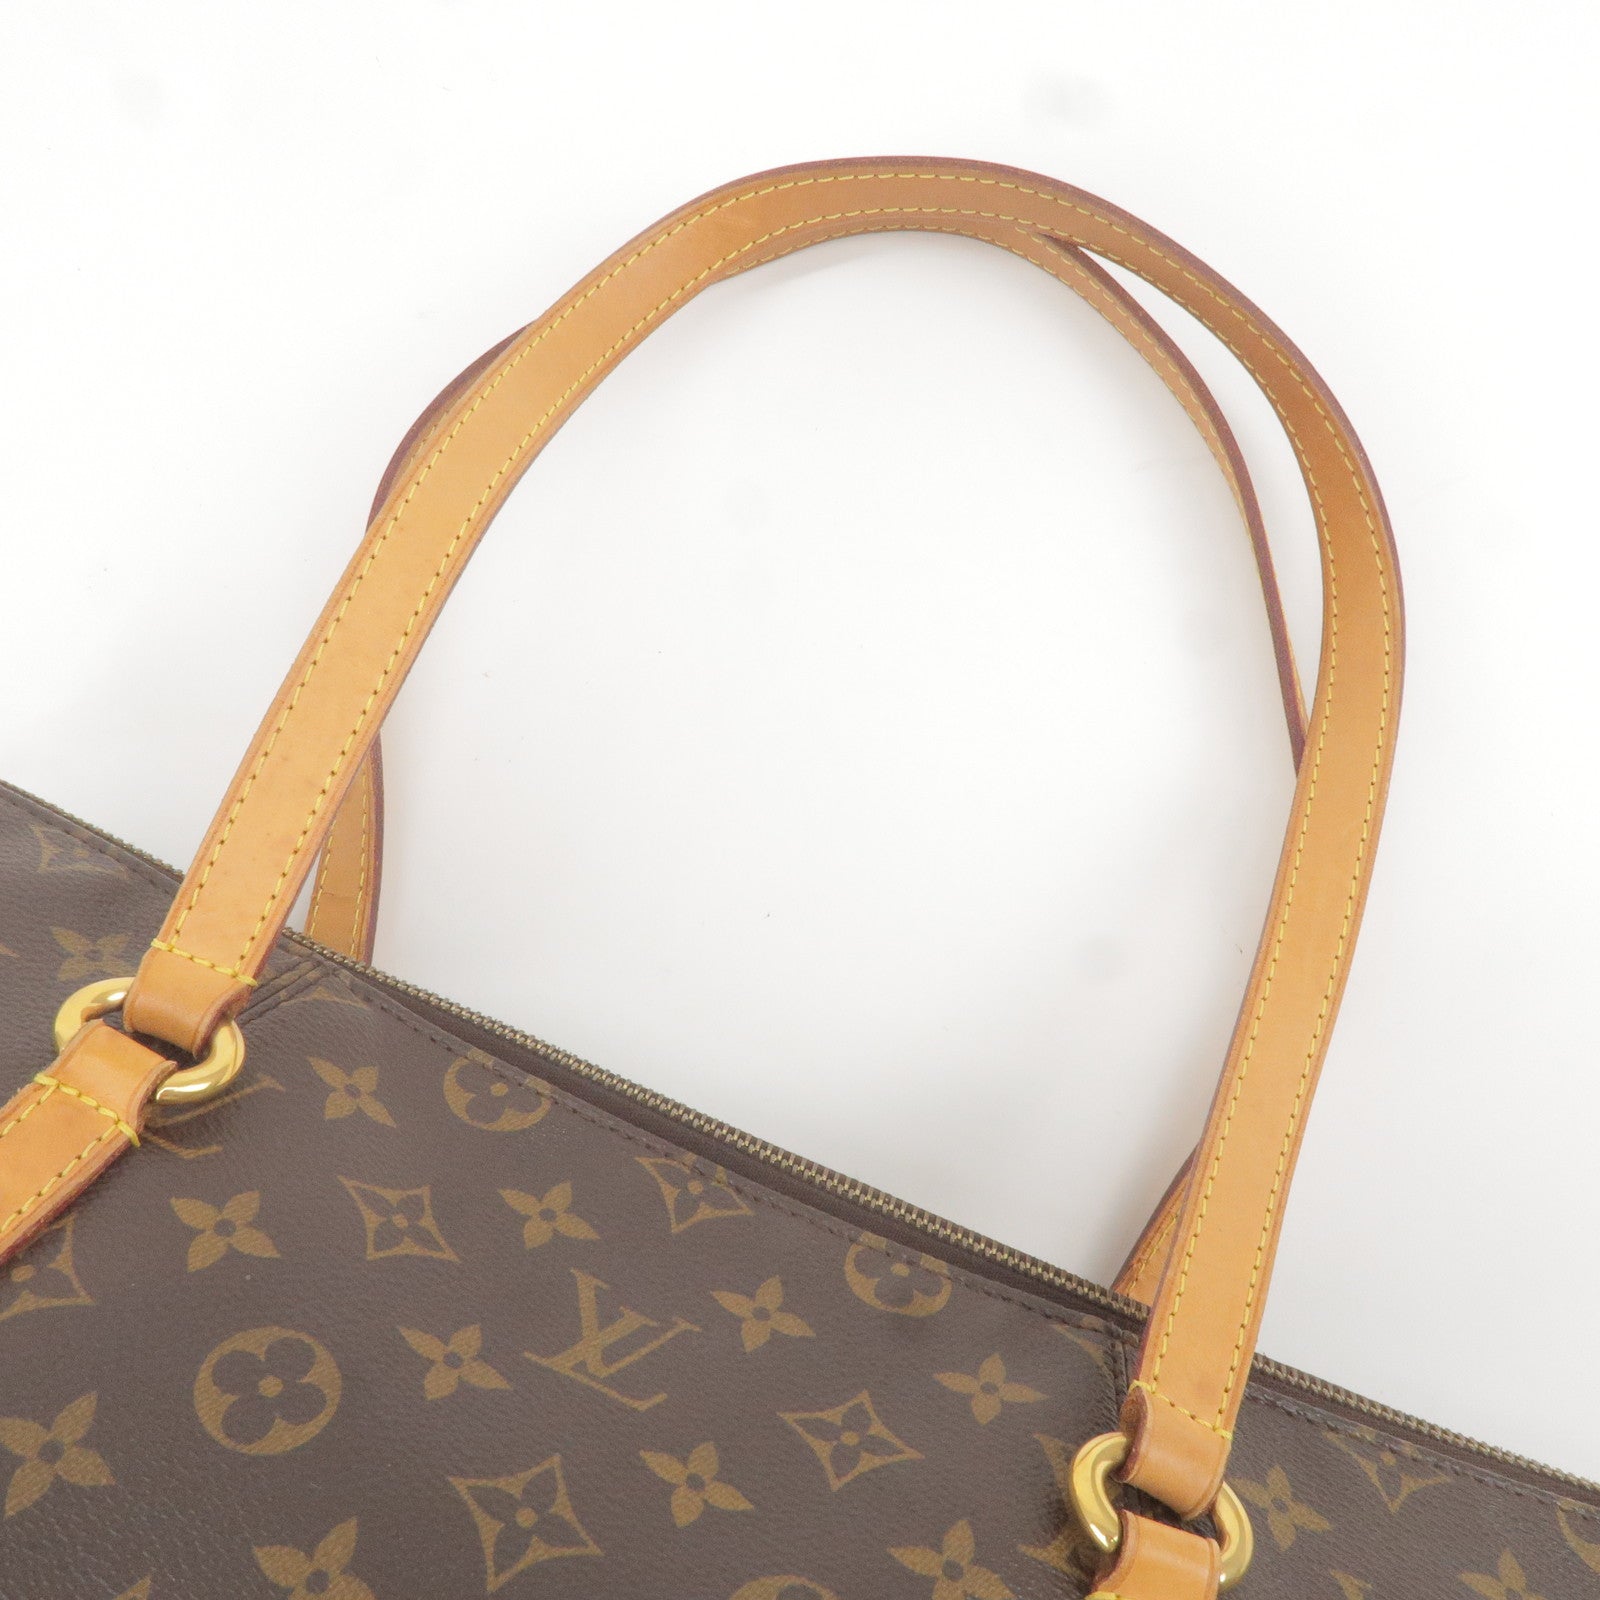 Authentic Louis Vuitton Monogram Totally MM Tote Bag M41015 LV